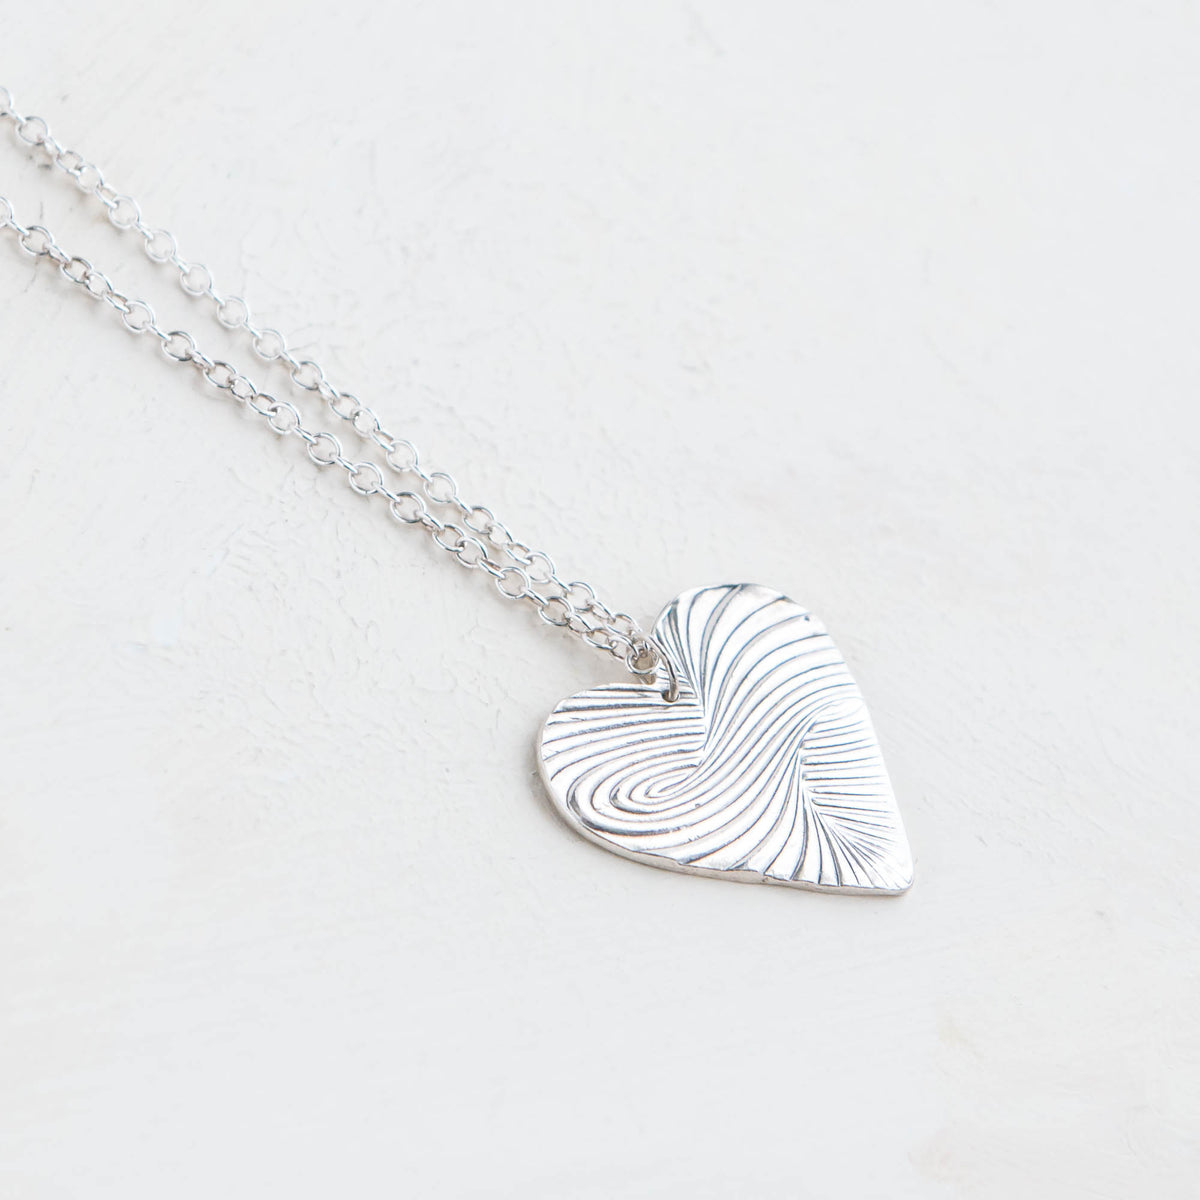 Solid Silver Heart Swirl Pendant